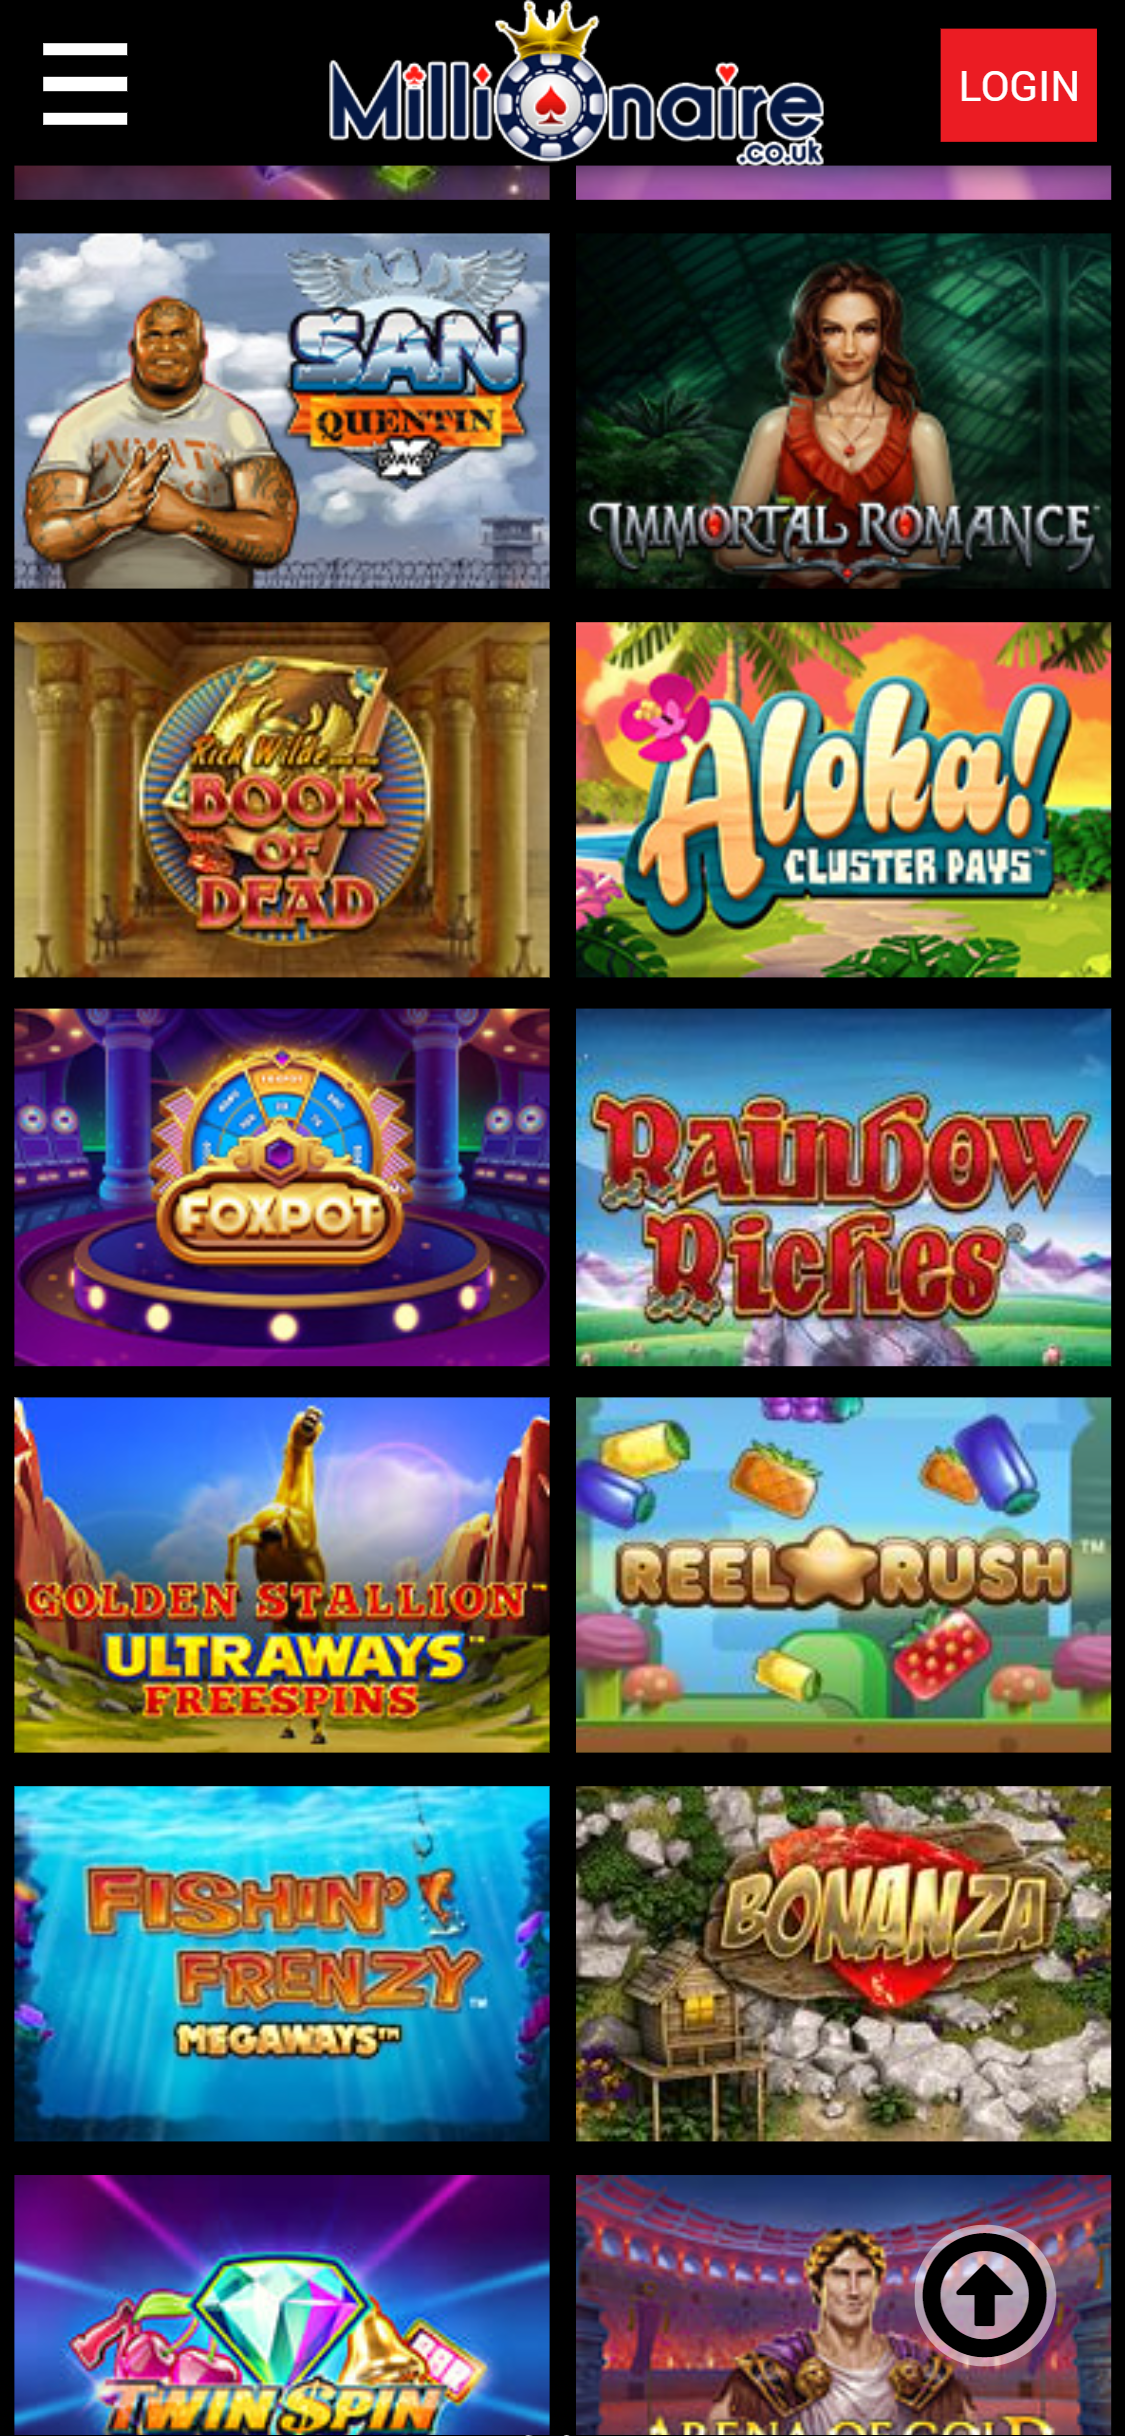 Millionaire Casino Mobile Games Review